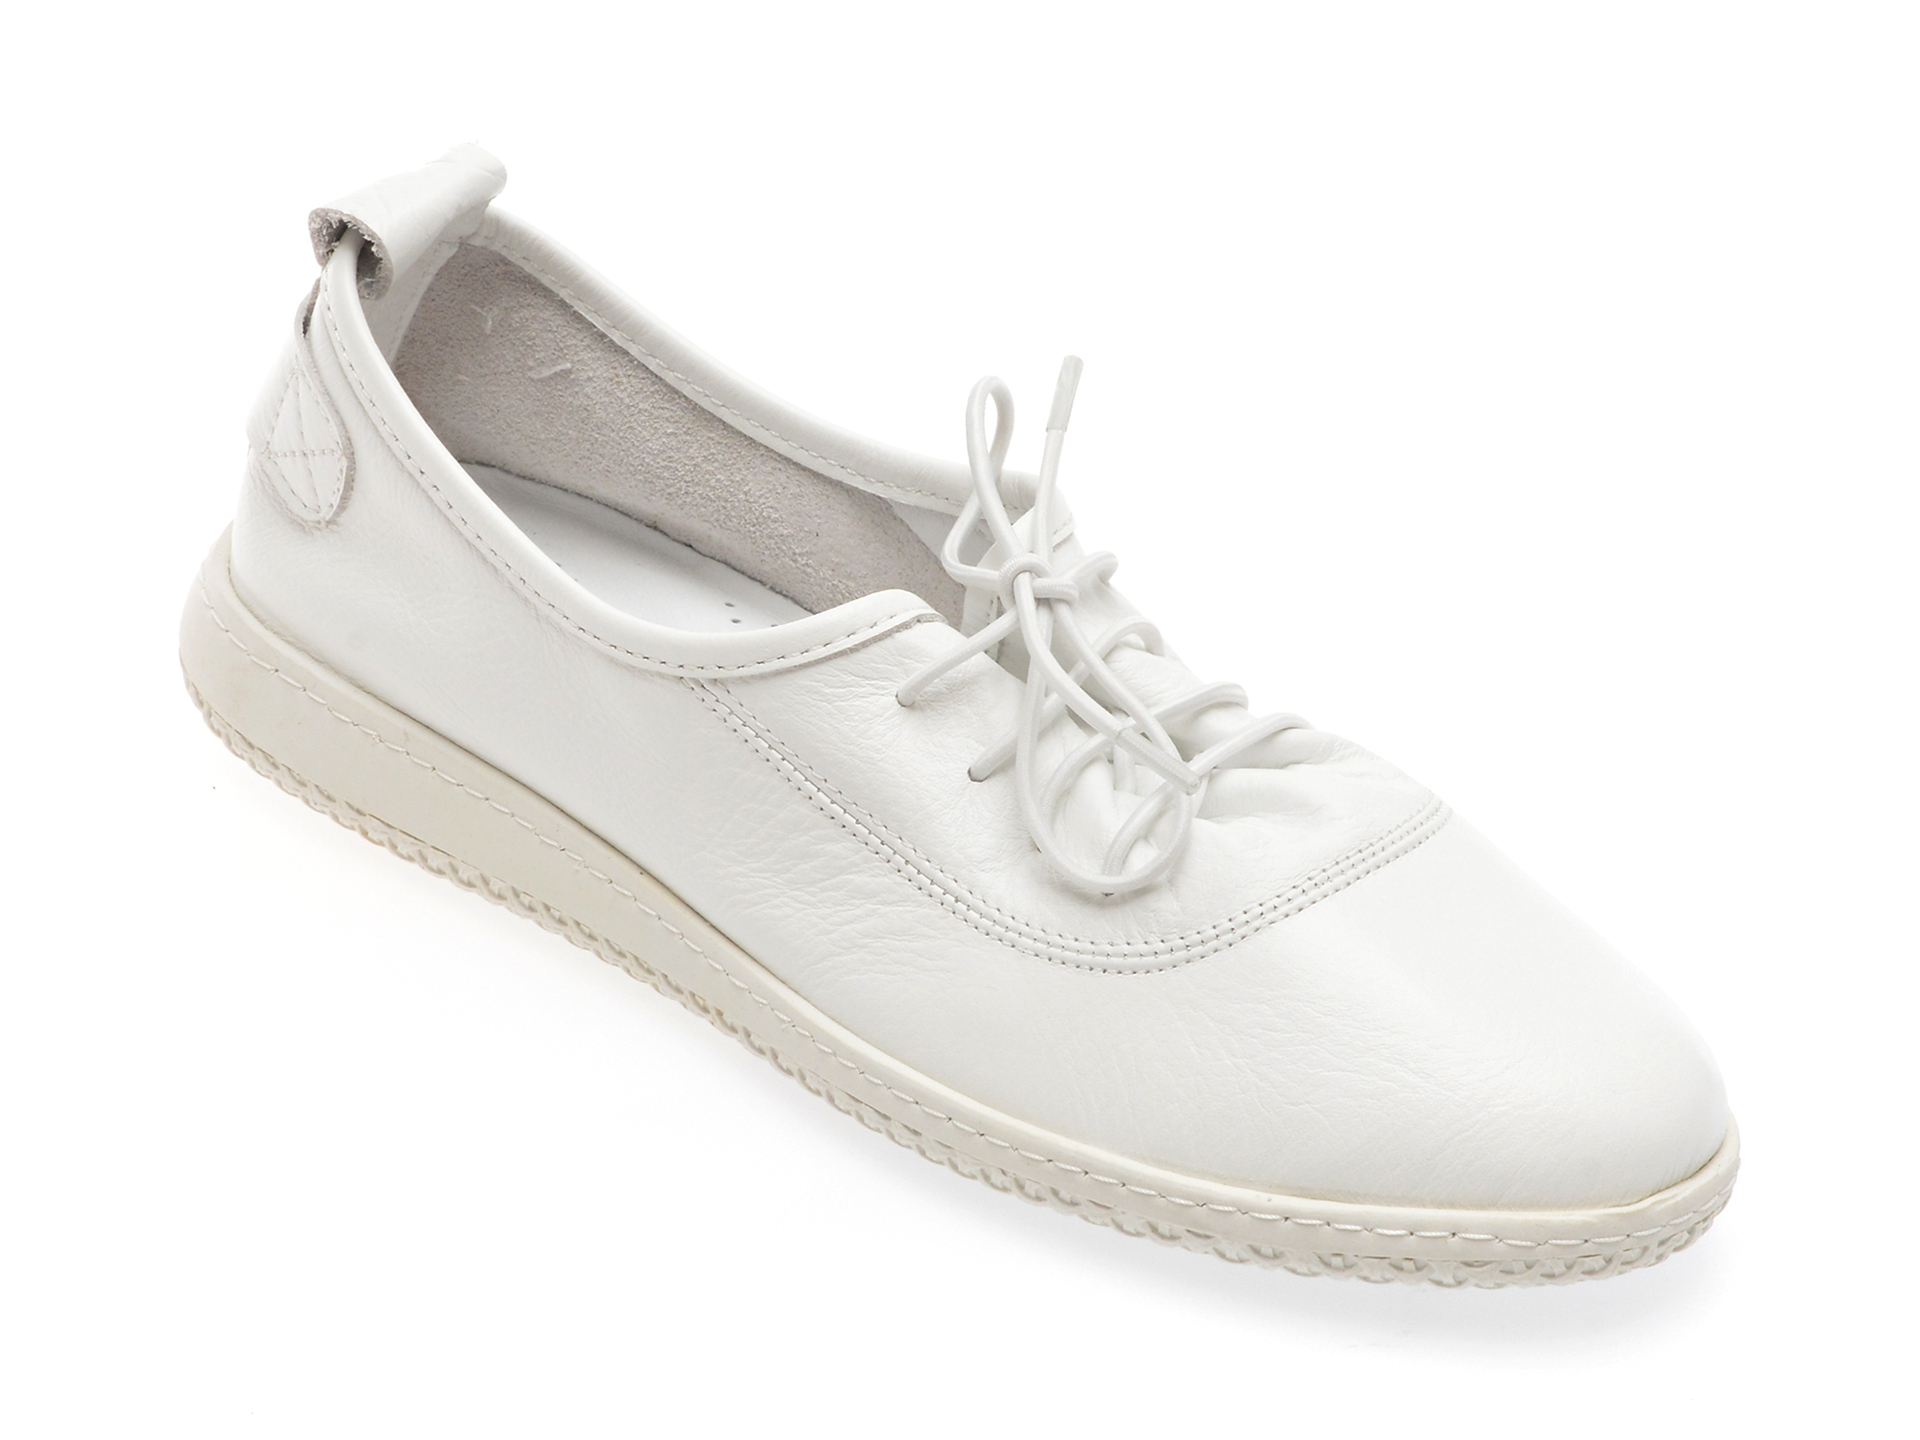 Pantofi casual MOLLY BESSA albi, 5002020, din piele naturala